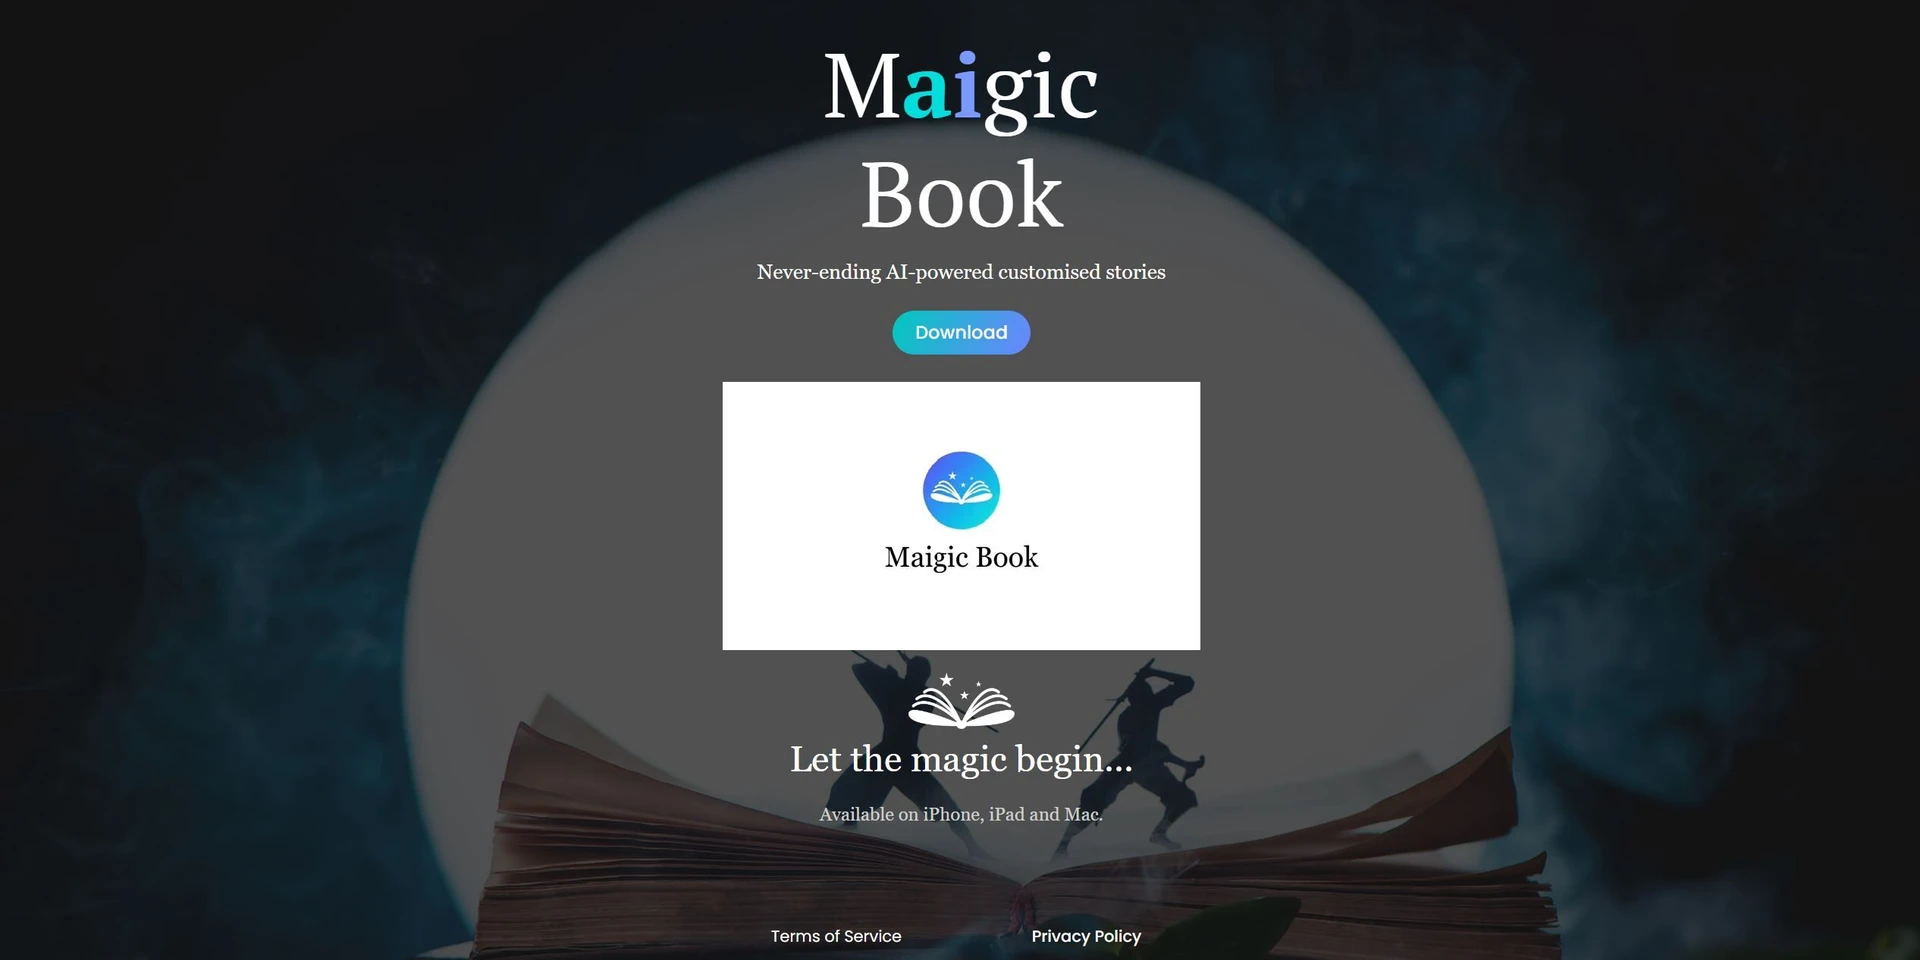 Maigic Bookwebsite picture